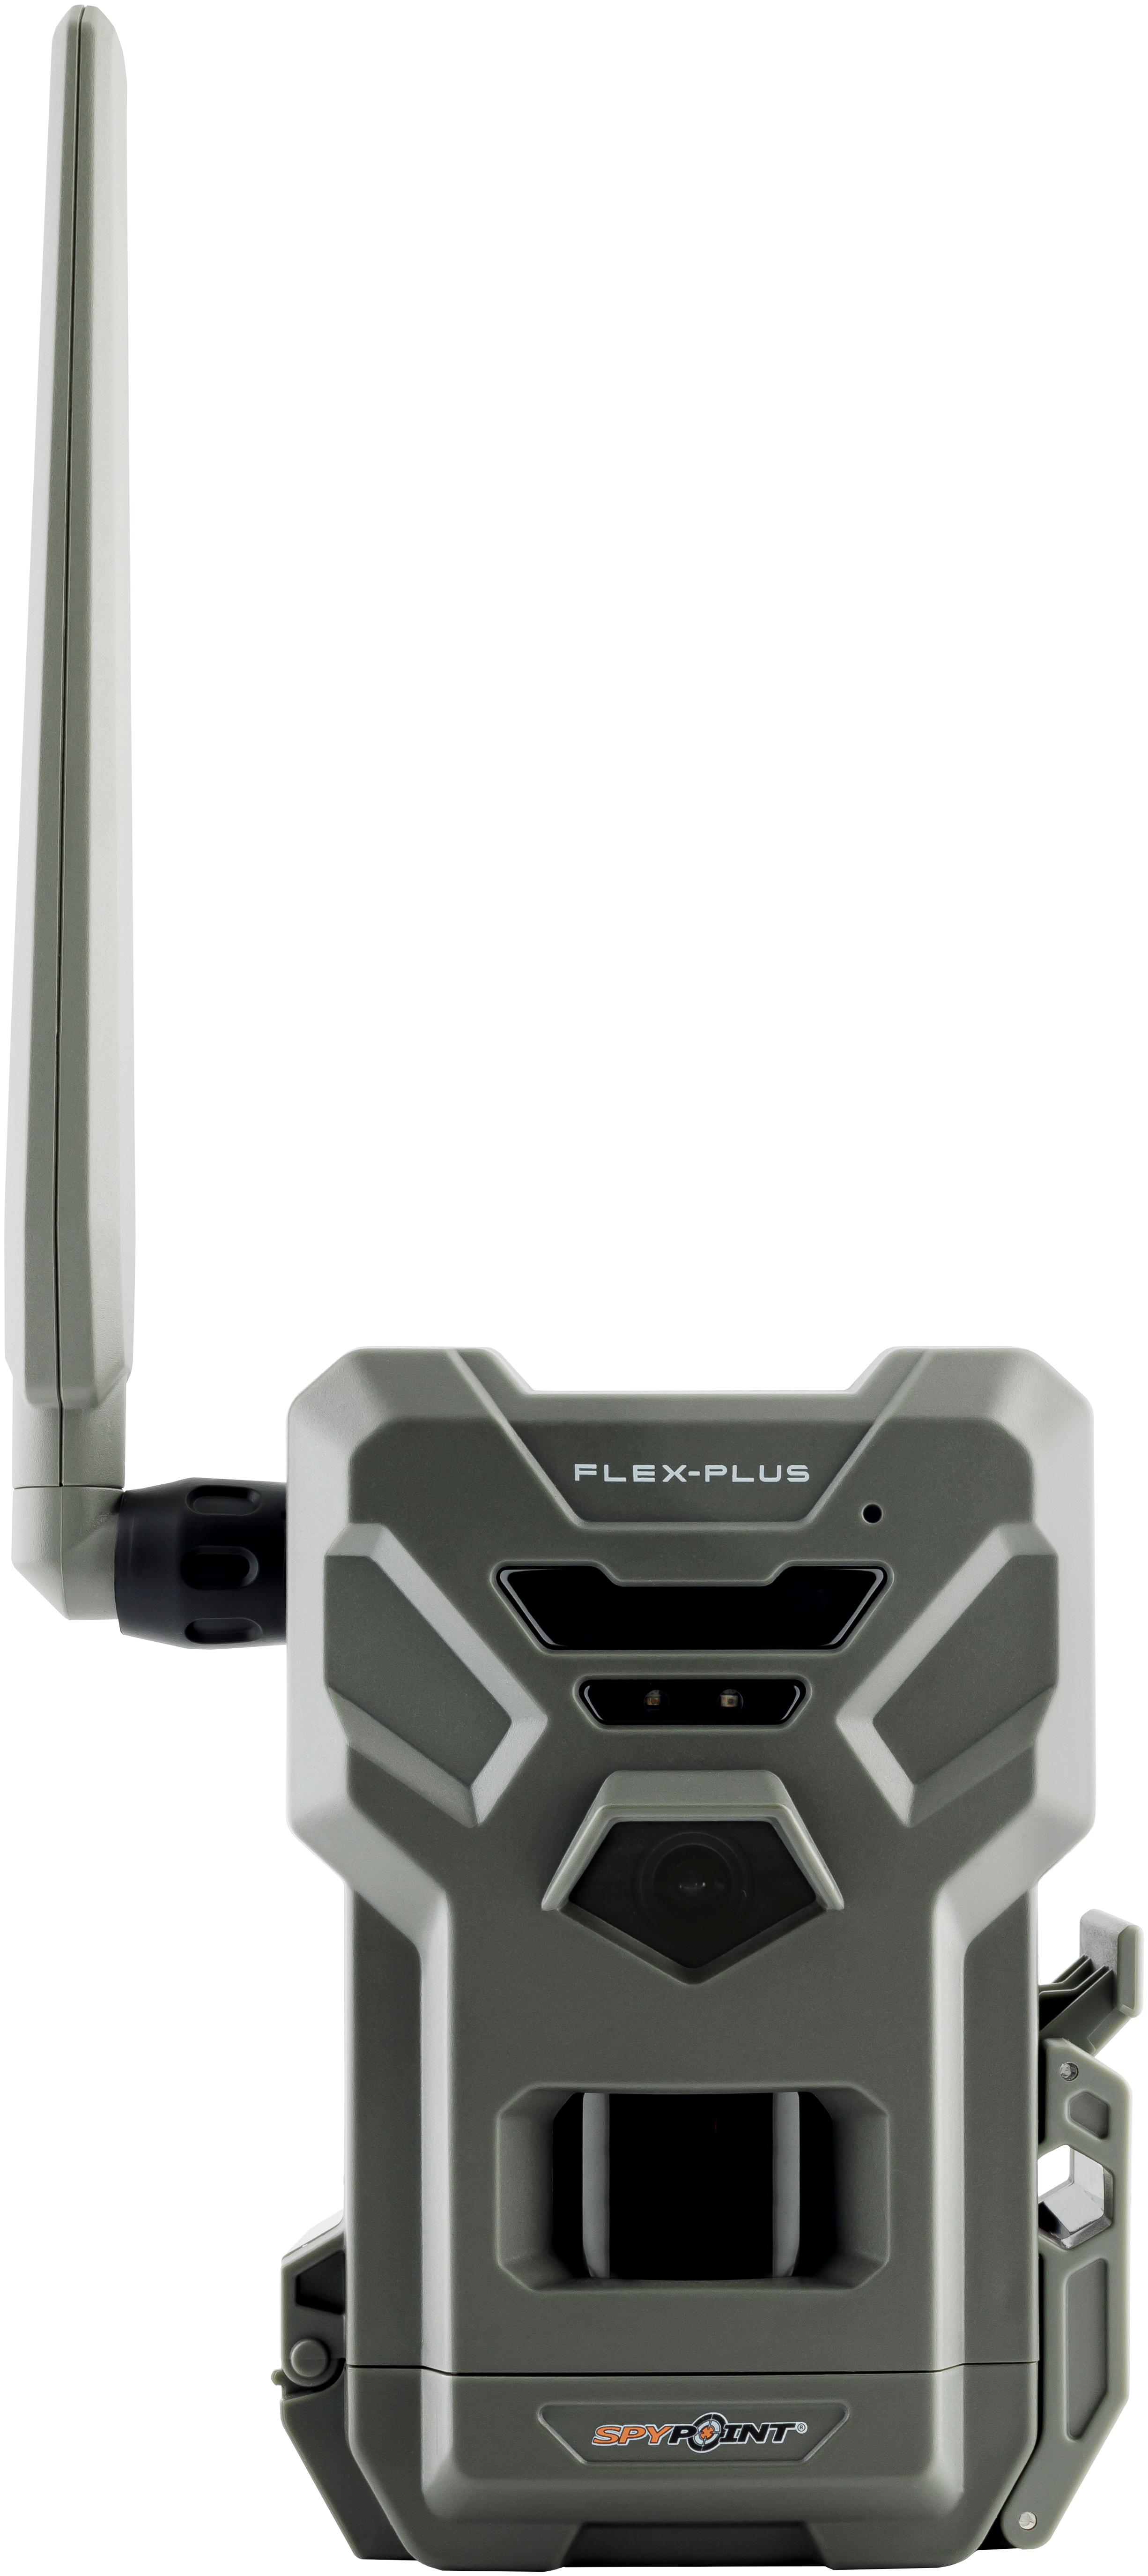 Cellular Trail Camera (FLEX-PLUS)